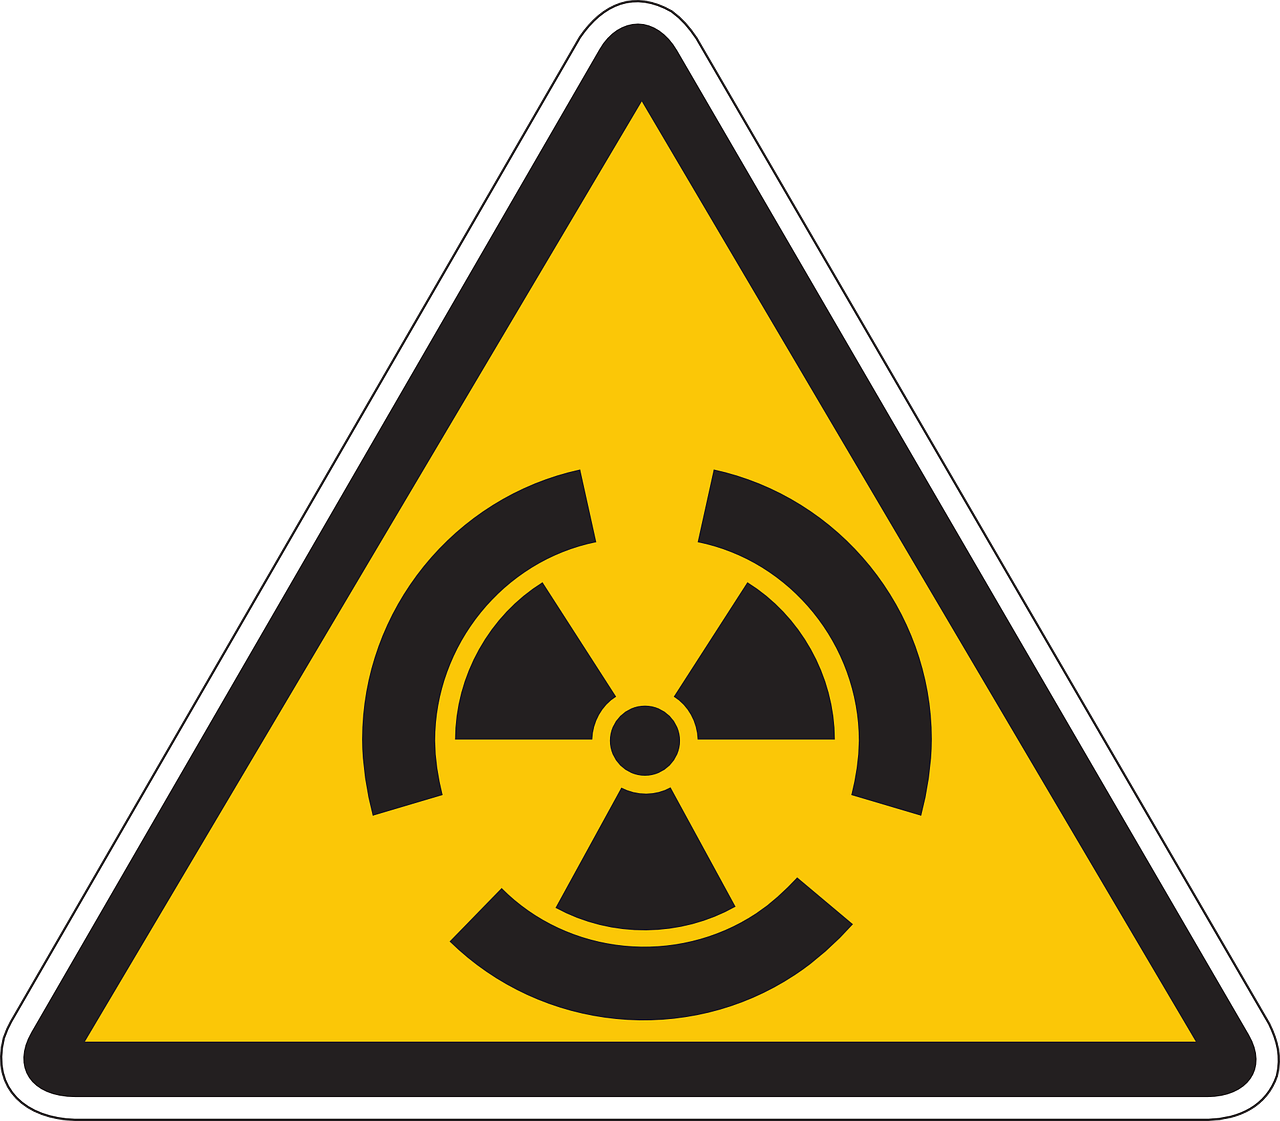 Radiation Safety and Handling Protocols